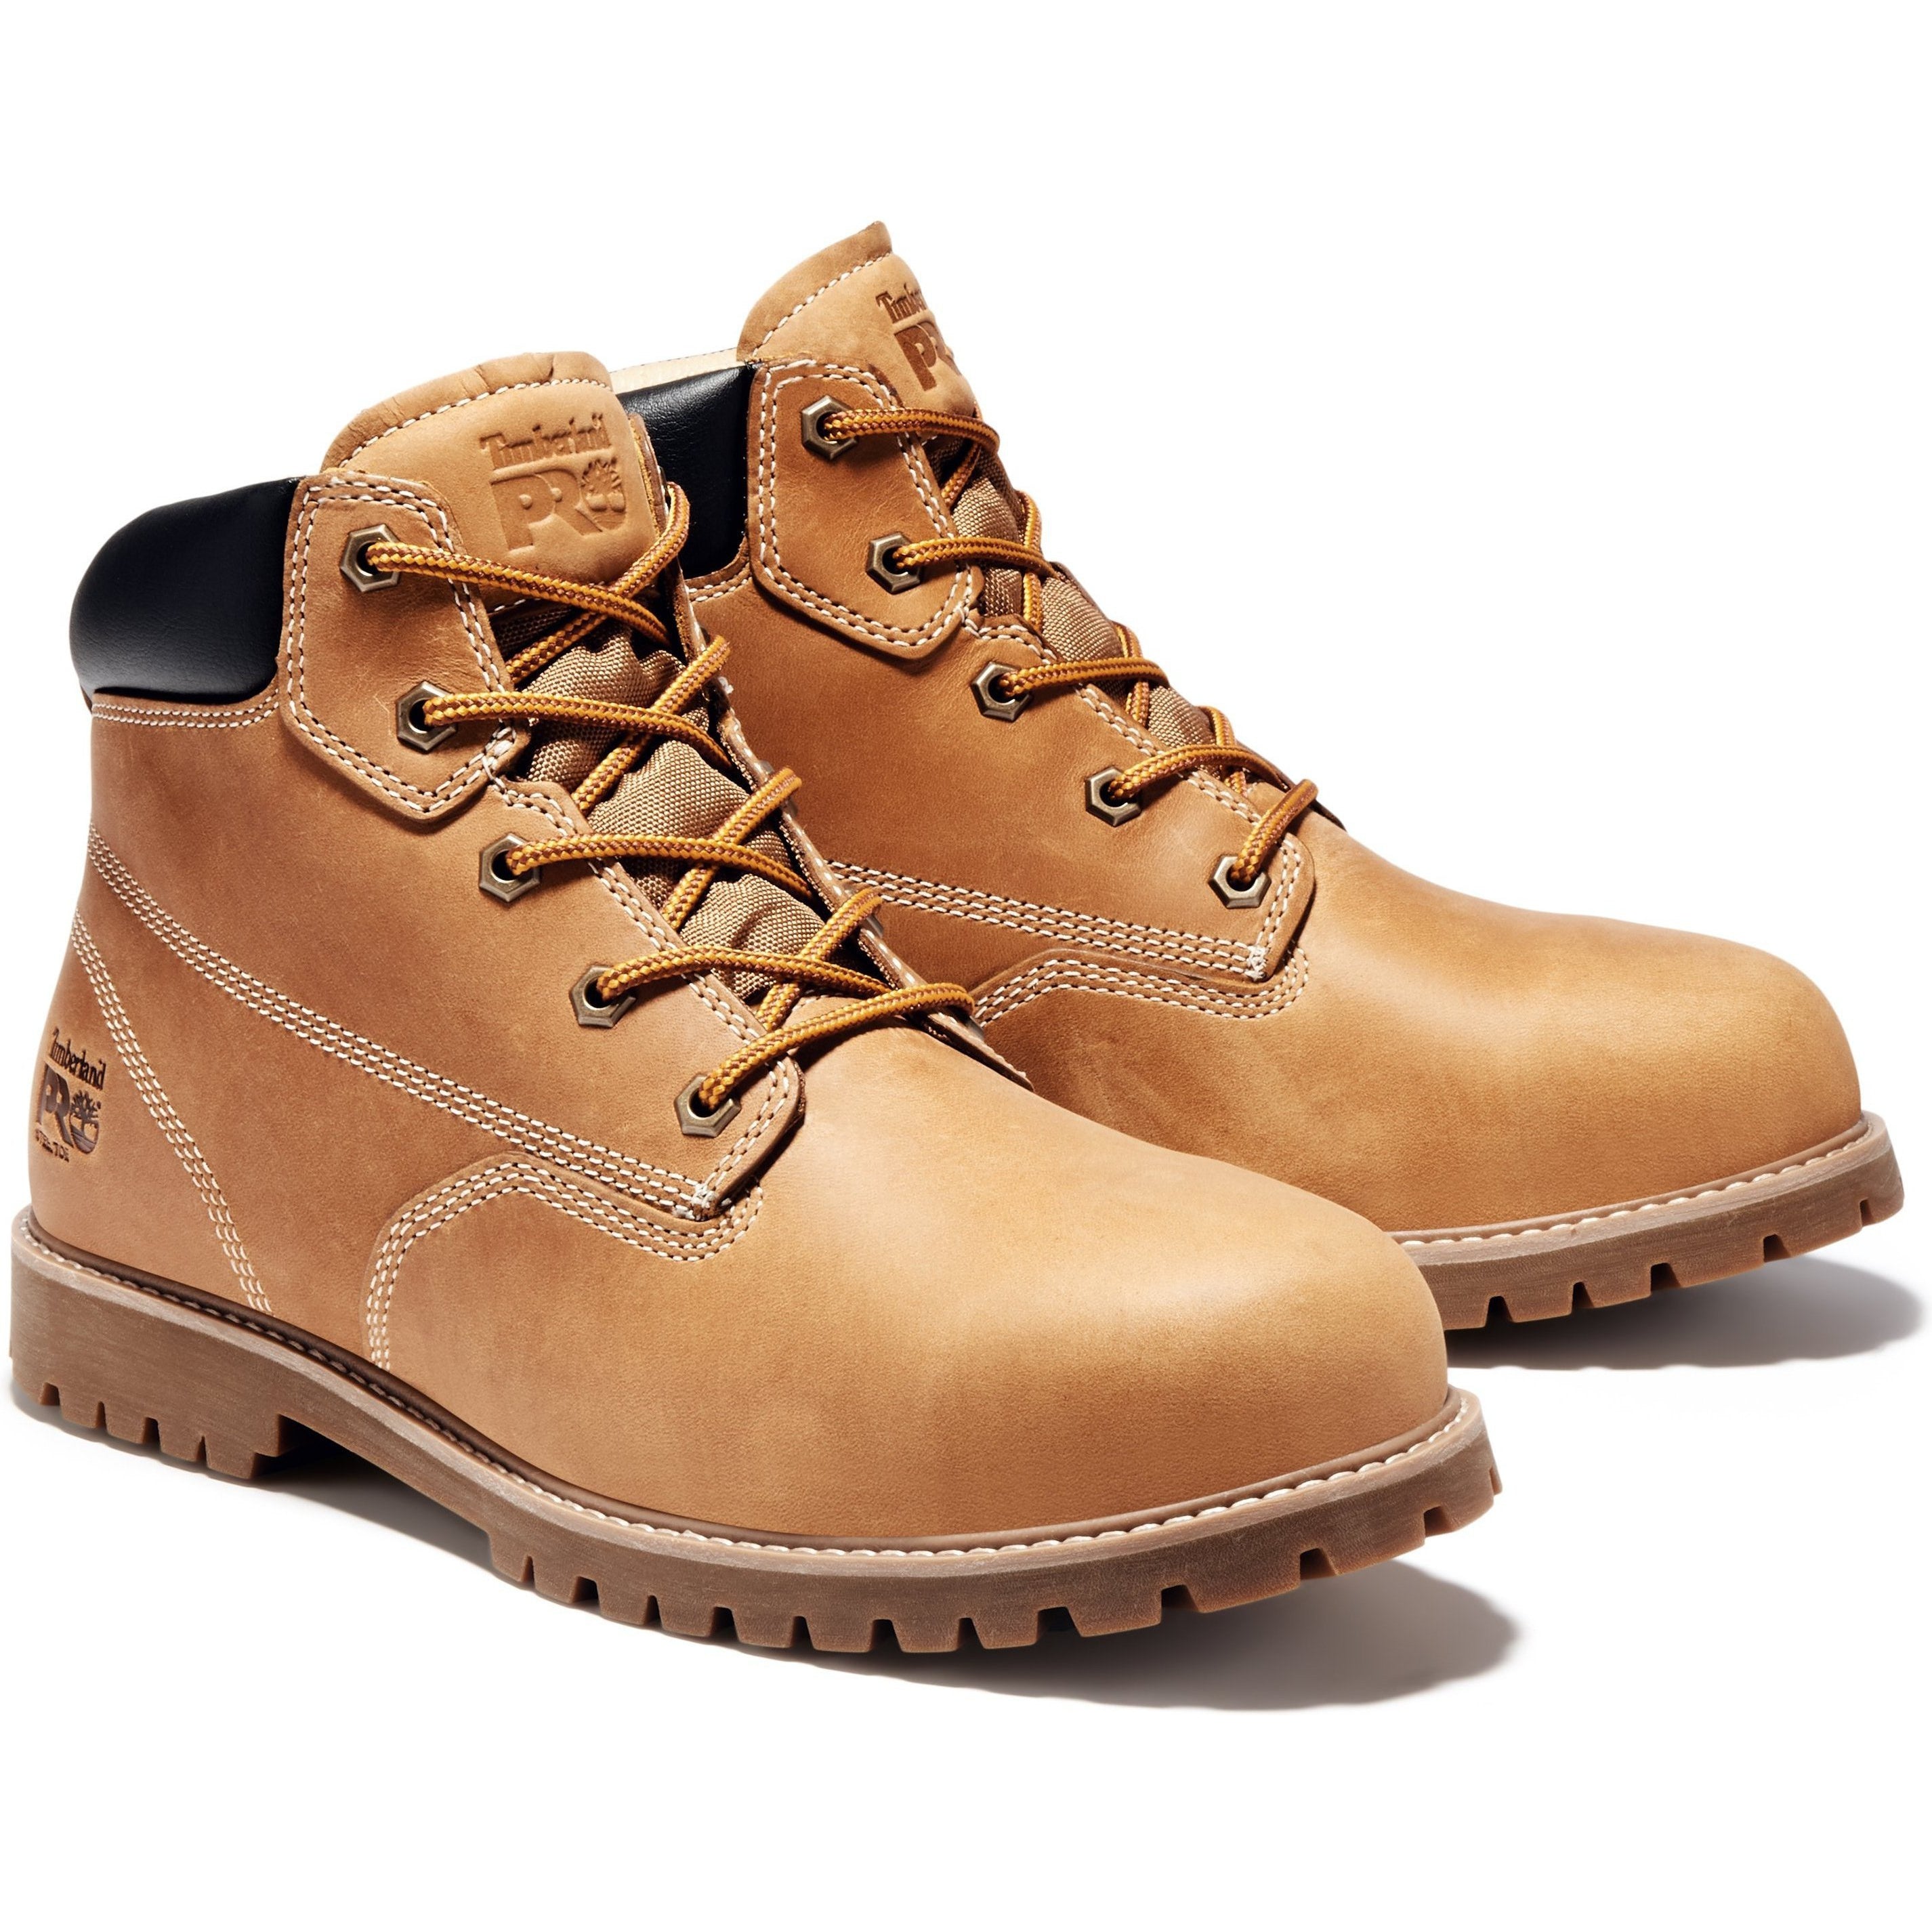 Timberland PRO Men's Gritstone 6" Steel Toe Work Boot - TB0A1Q8K231 8.5 / Medium / Wheat - Overlook Boots